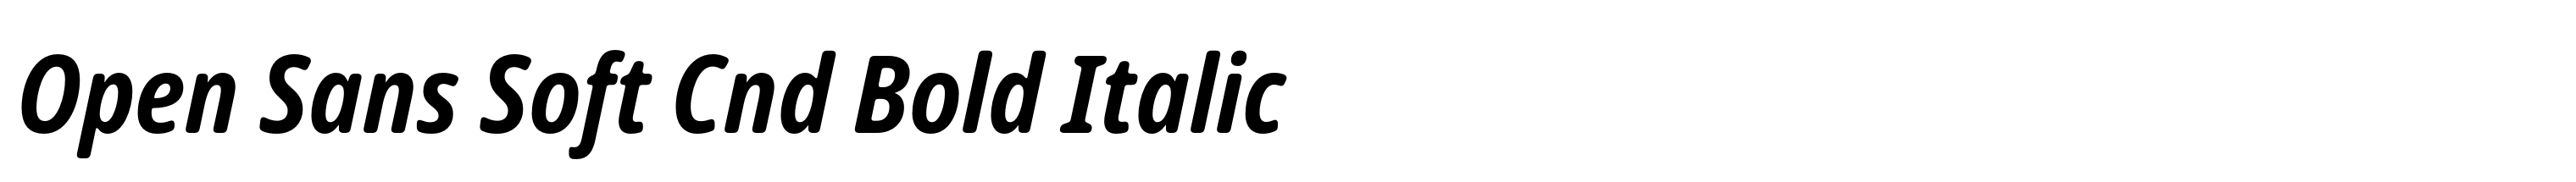 Open Sans Soft Cnd Bold Italic